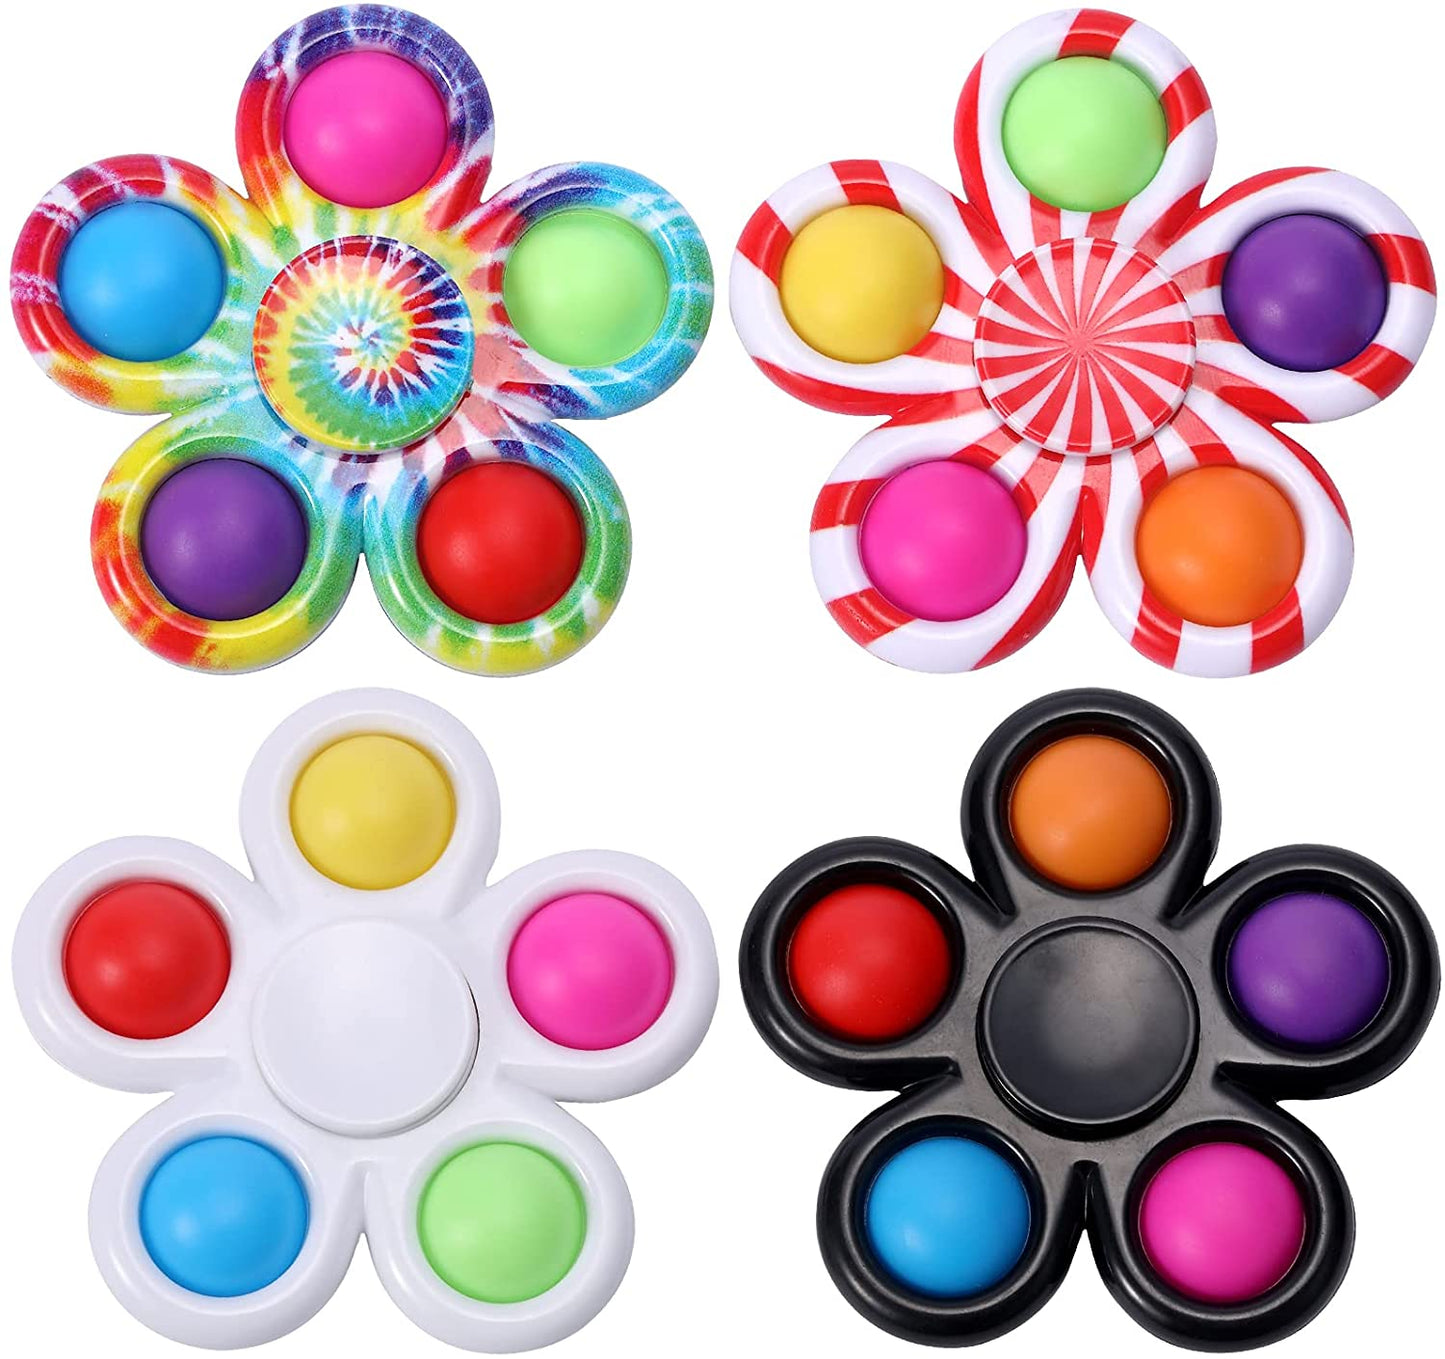 Pop 5 Fidget Spinner Simple Dimple 5 Fidget Popper, Tie-Dye Rotatable Bubble 5 Fidget Spinner Hand Spinner (1 Random Color Pick)